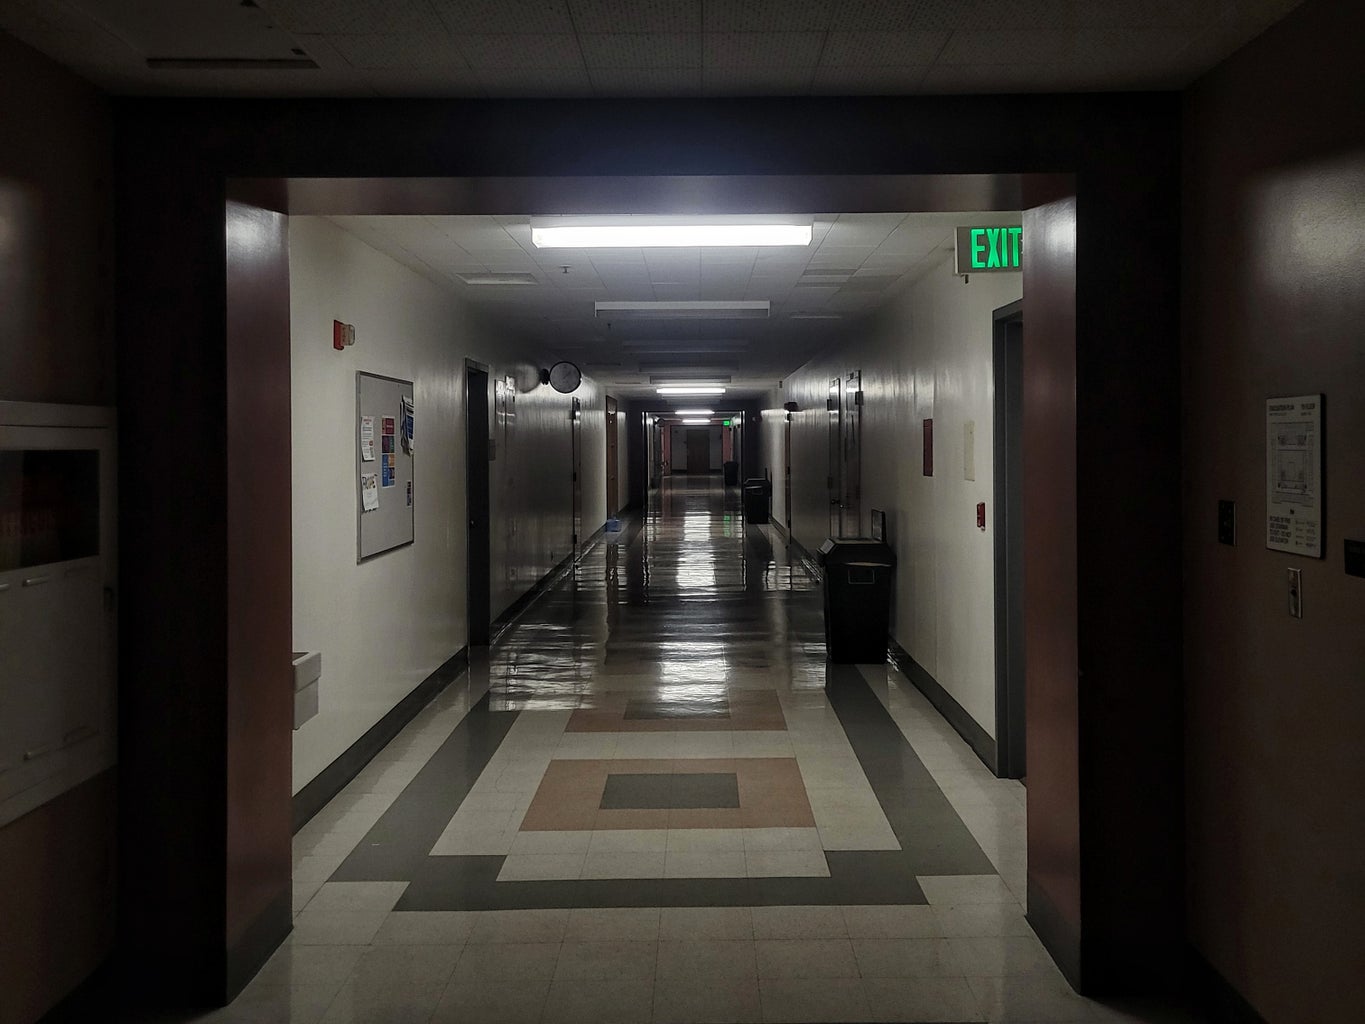 dimly lit hallway in building